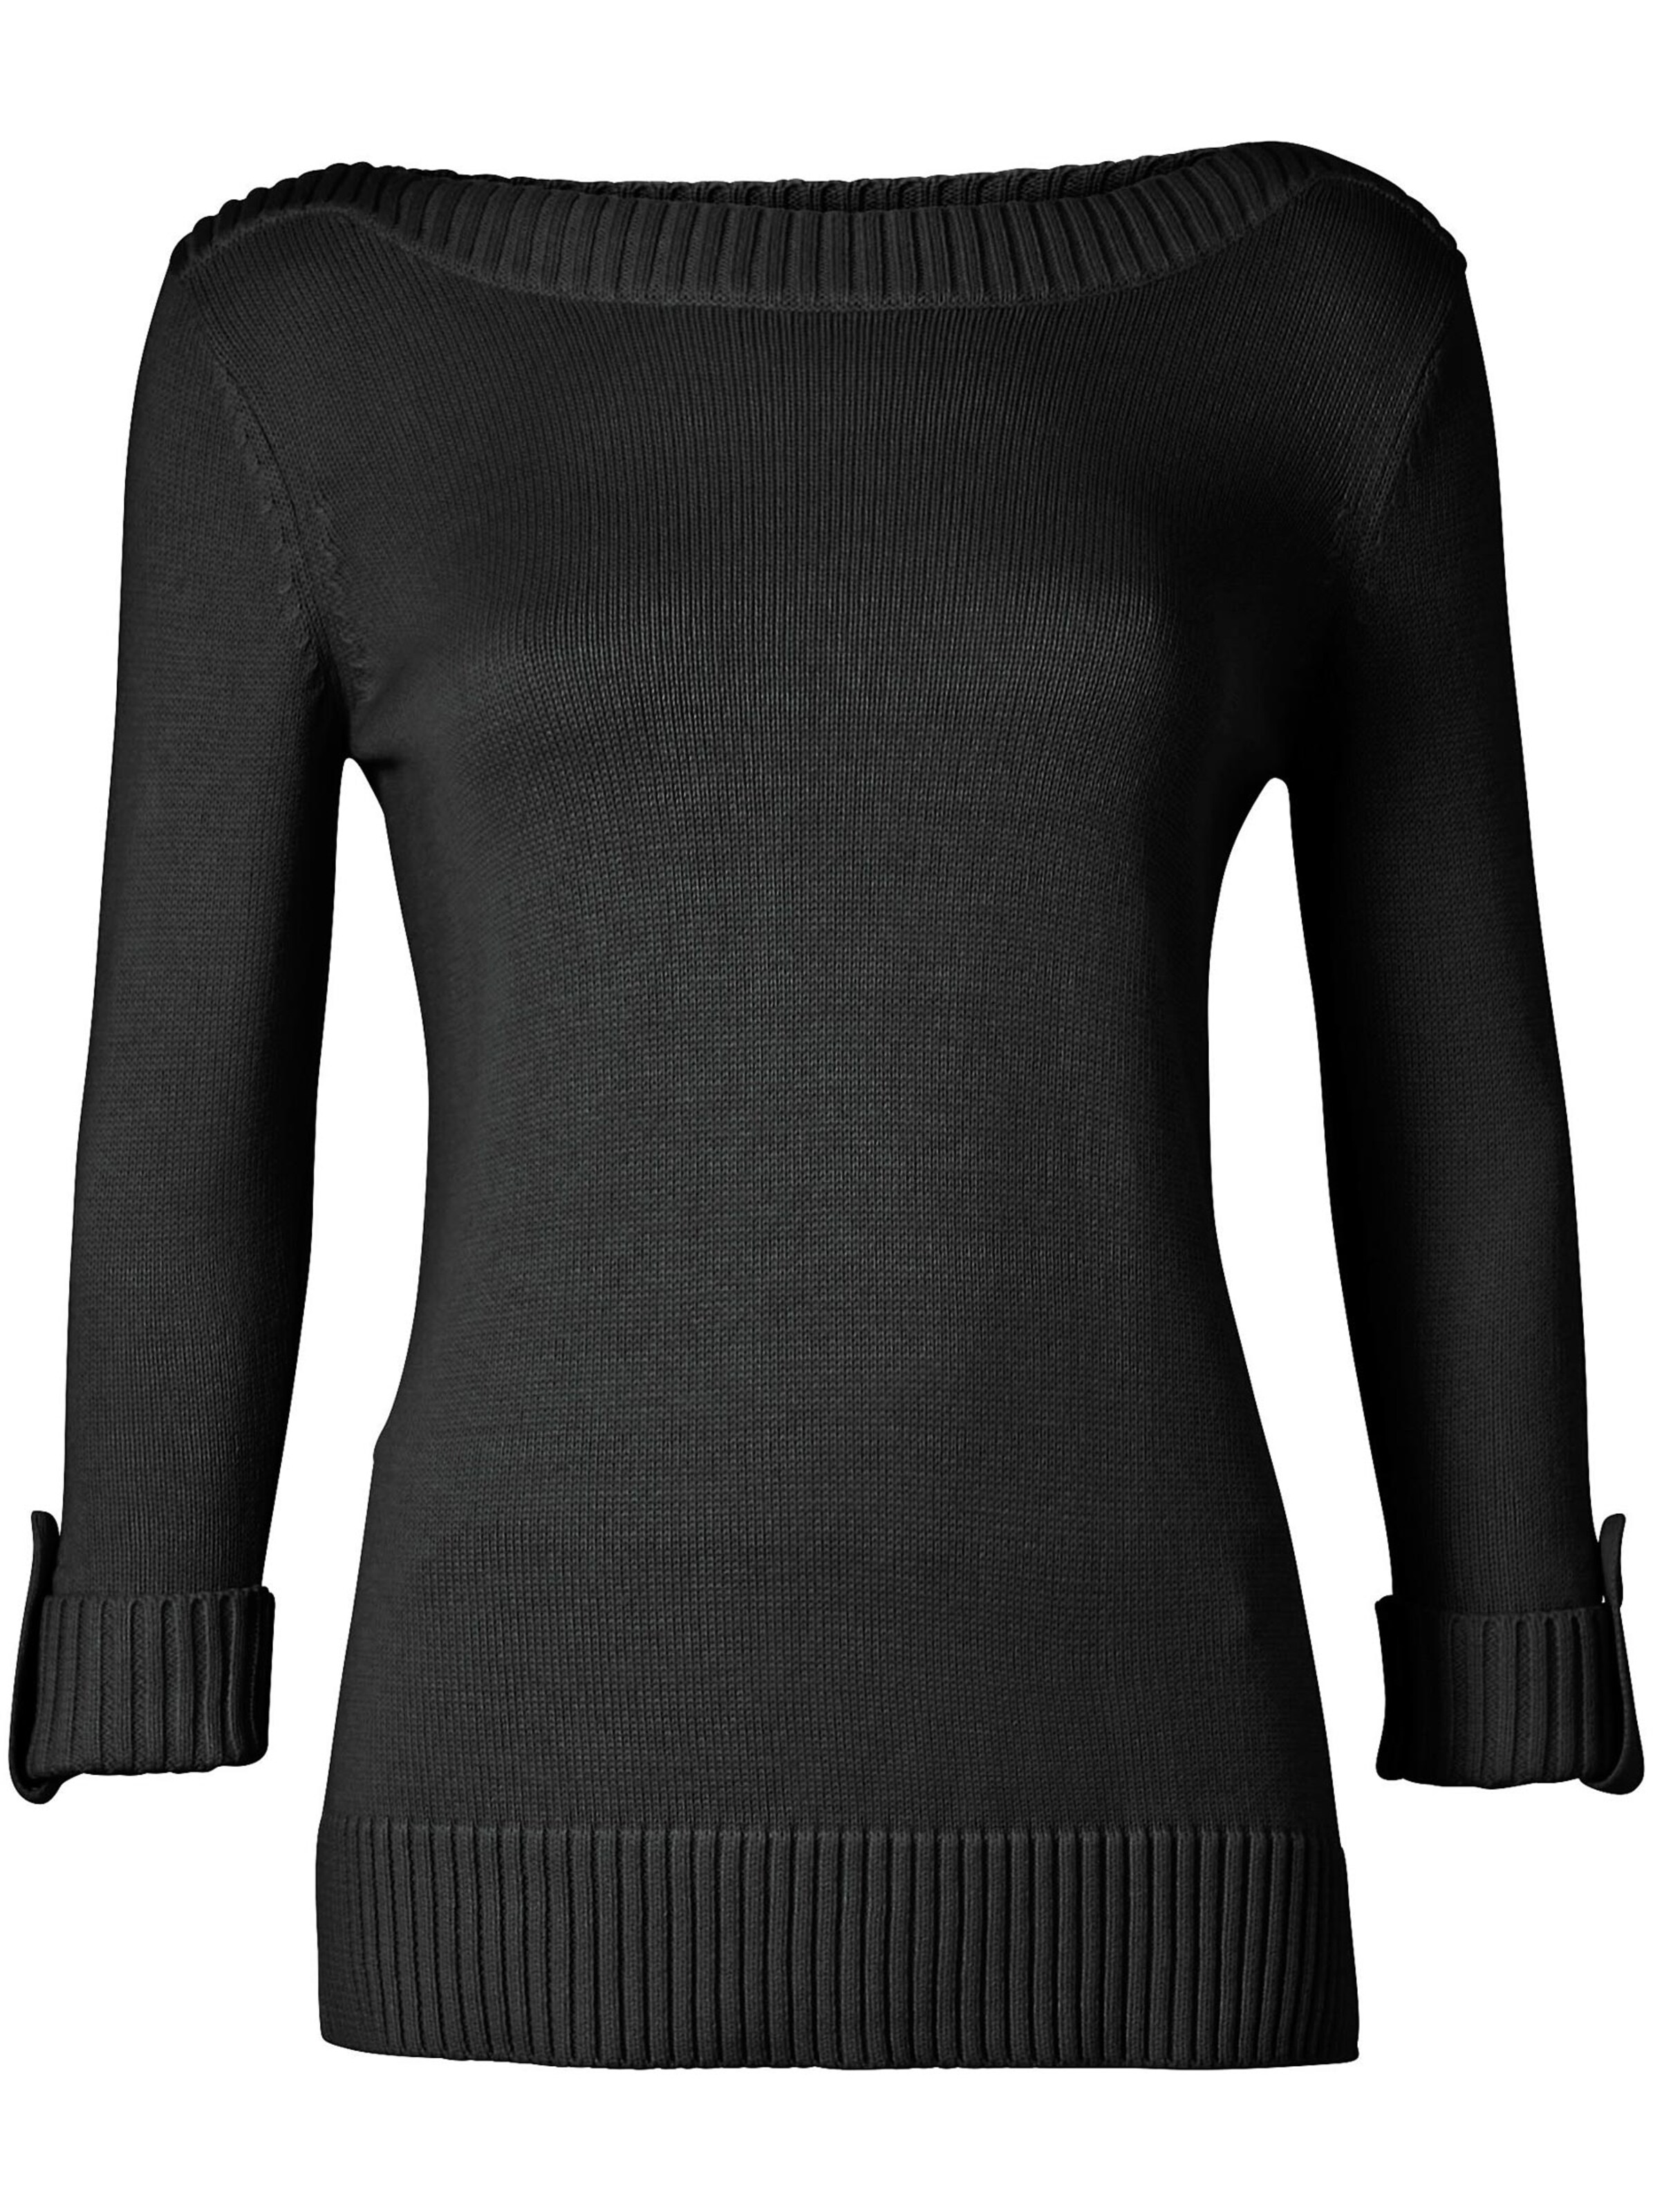 Damenmode Pullover 3/4 Arm-Pullover in schwarz 